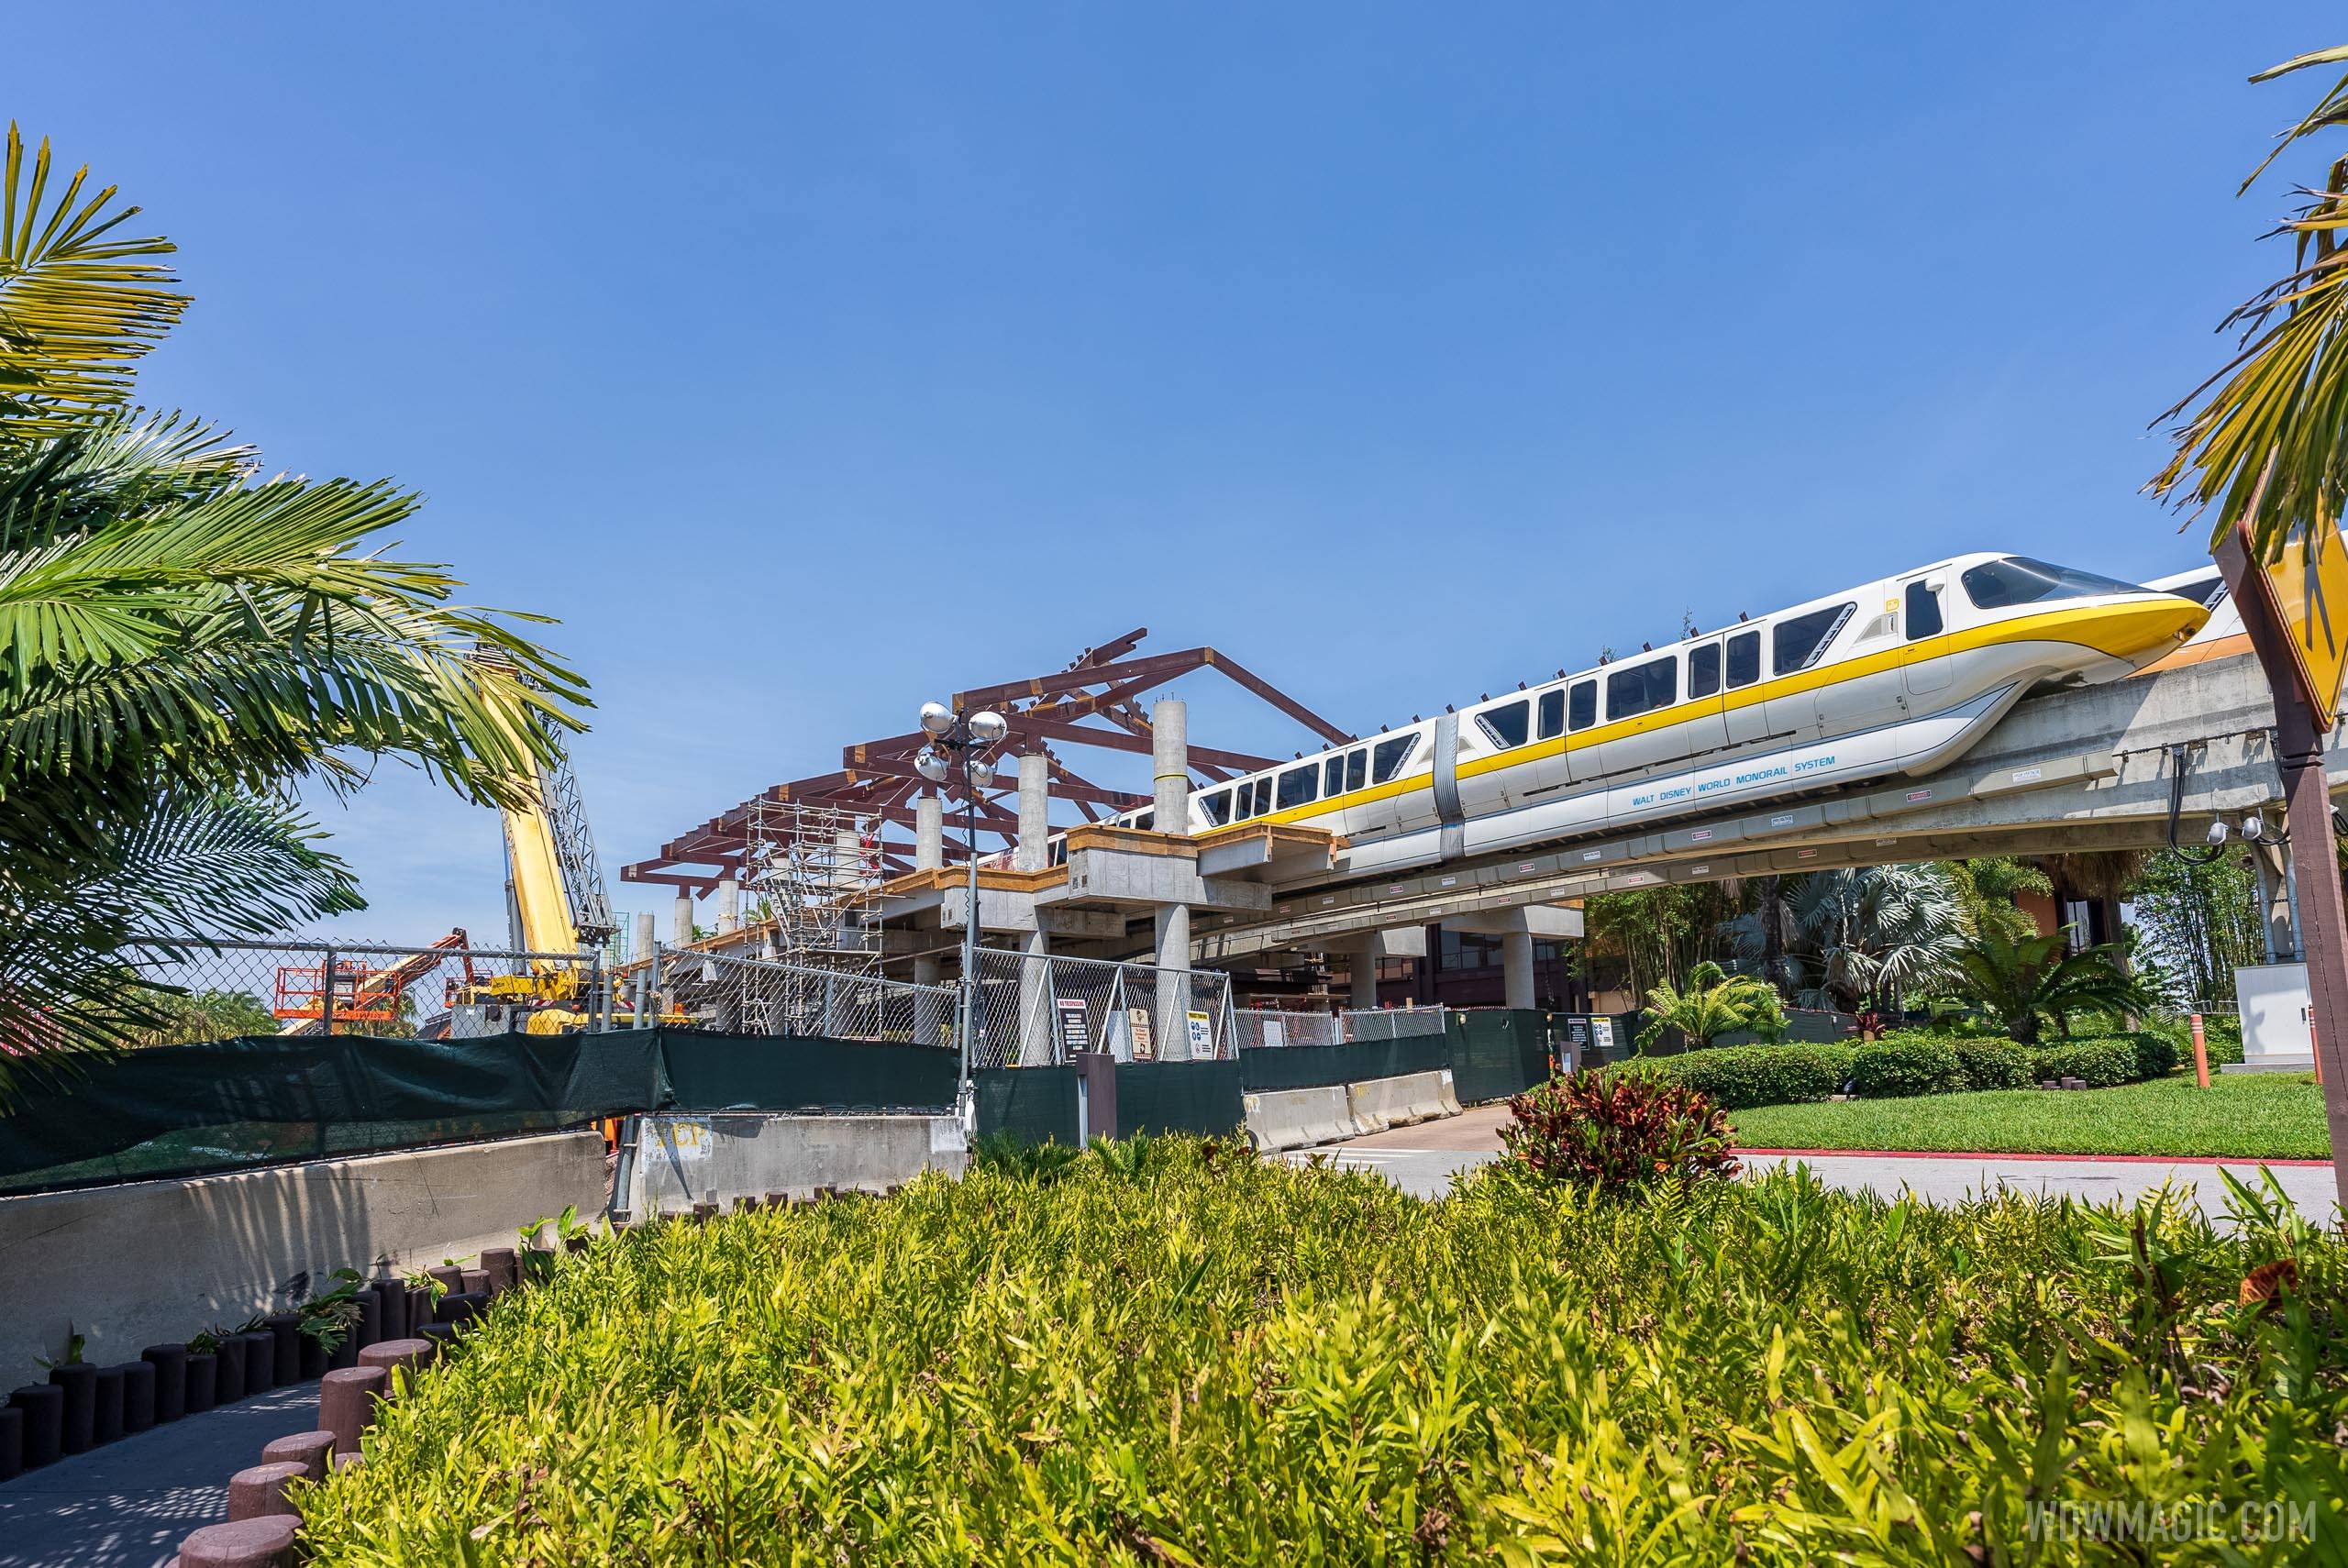 New Monorail station taking shape at Disney's Polynesian Village Resort